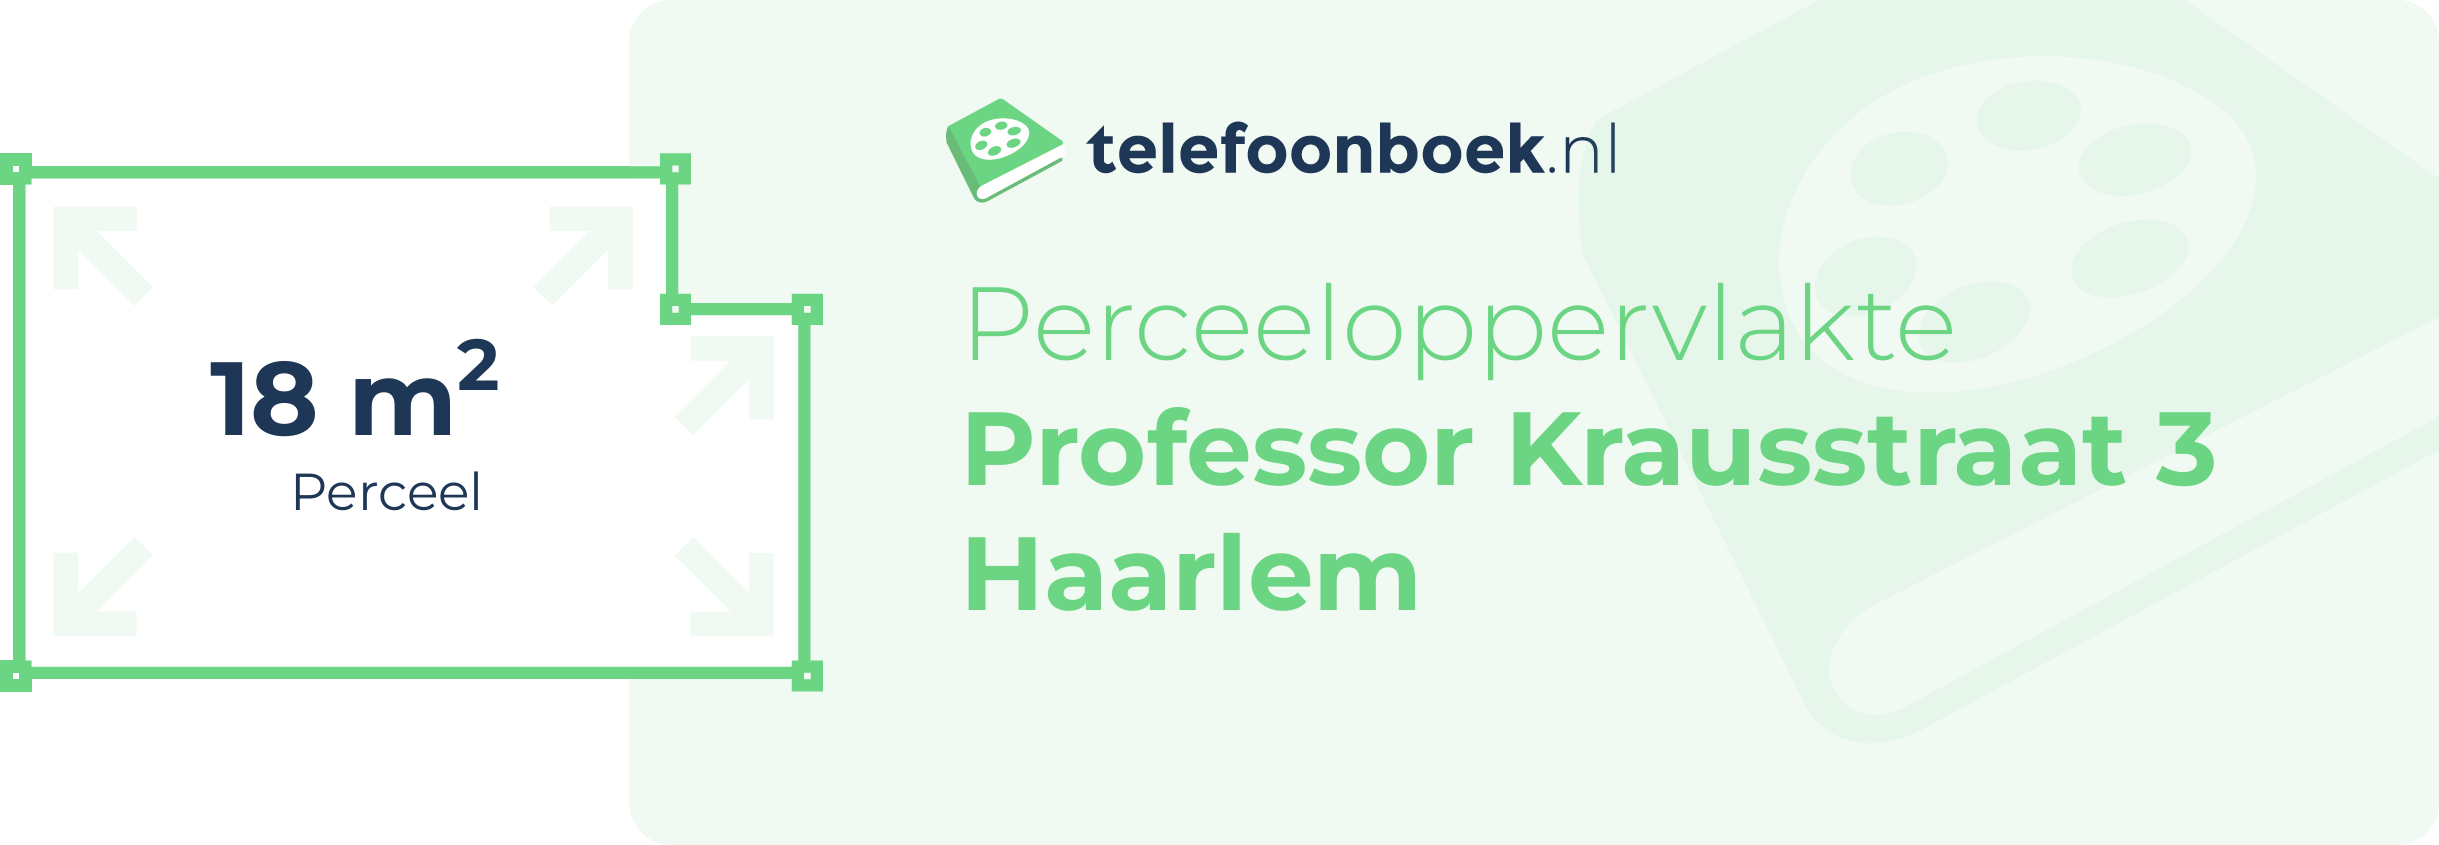 Perceeloppervlakte Professor Krausstraat 3 Haarlem